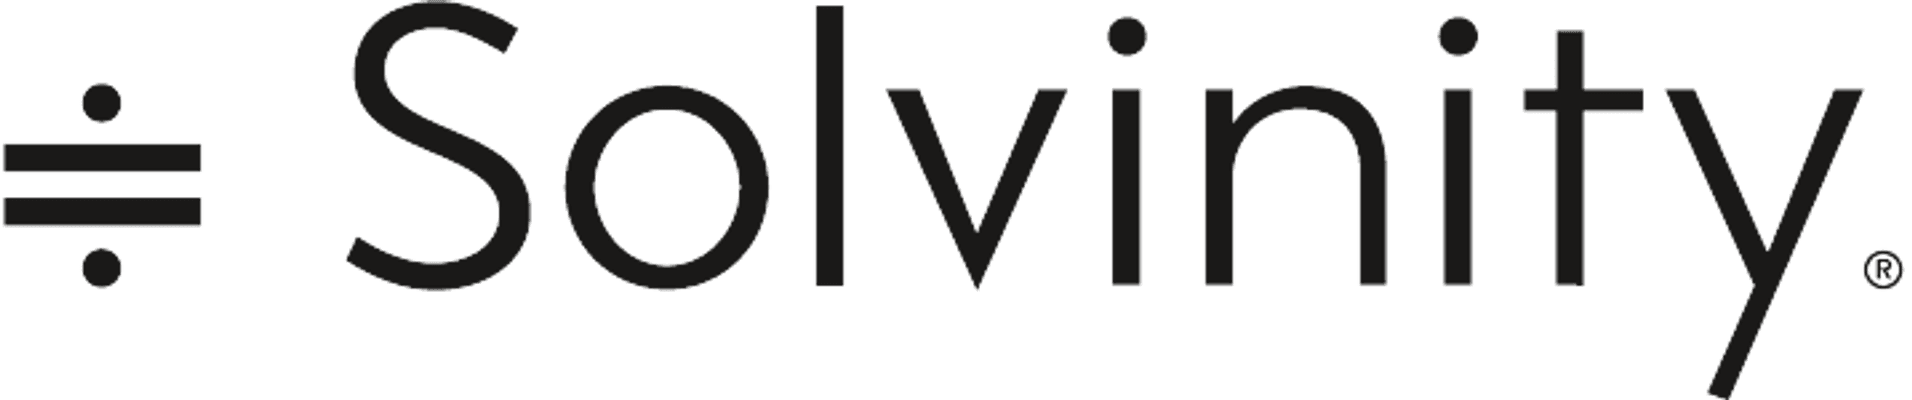 Logo van Solvinity